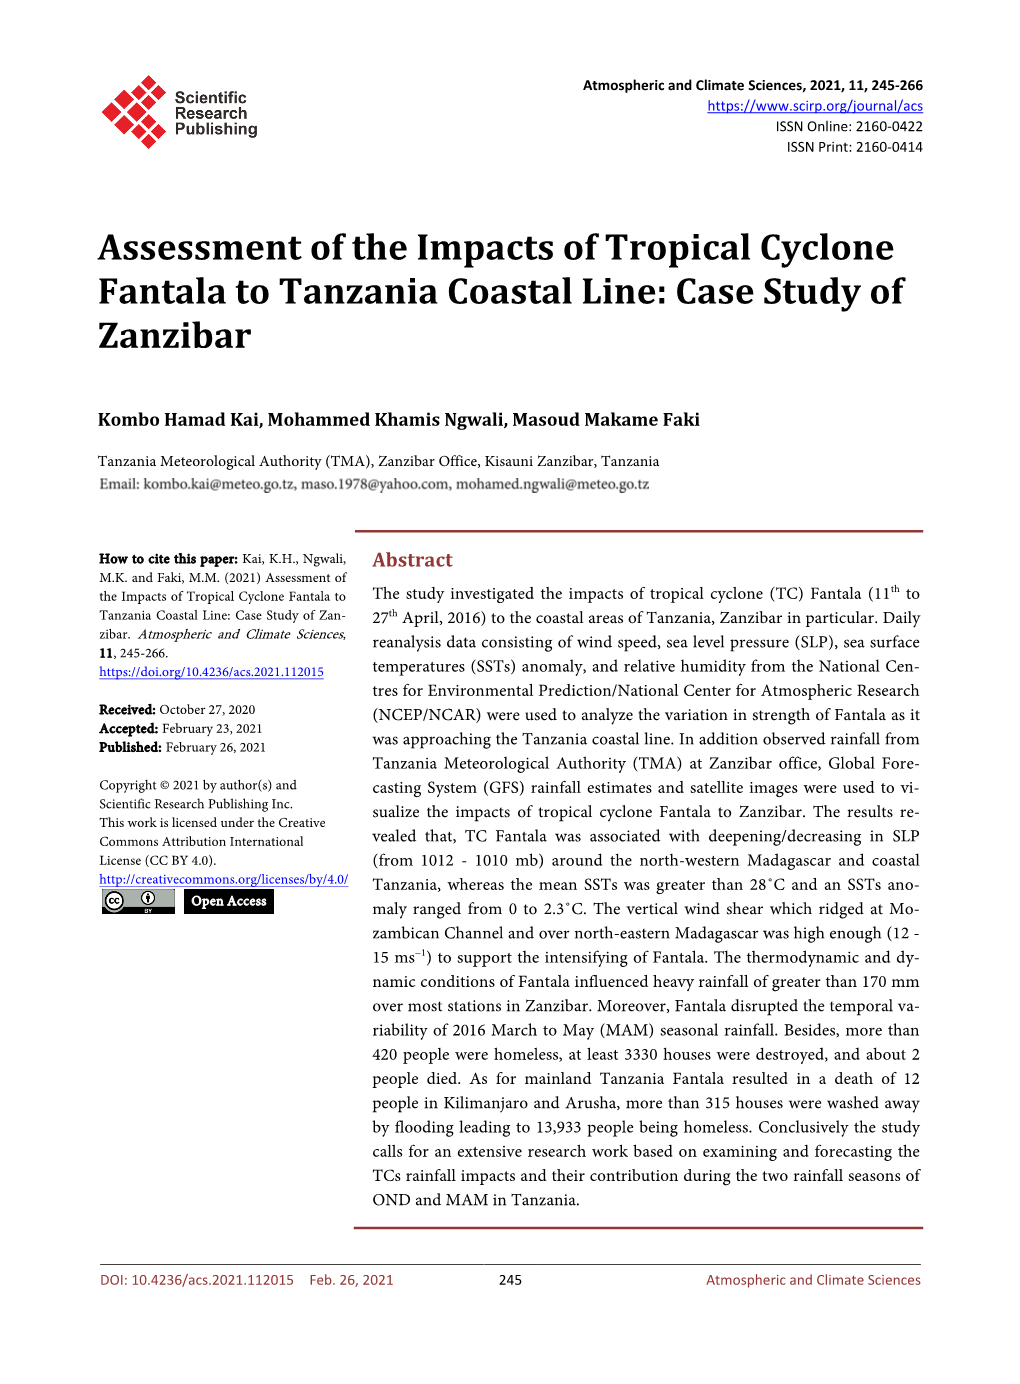 Assessment of the Impacts of Tropical Cyclone Fantala to Tanzania Coastal Line: Case Study of Zanzibar